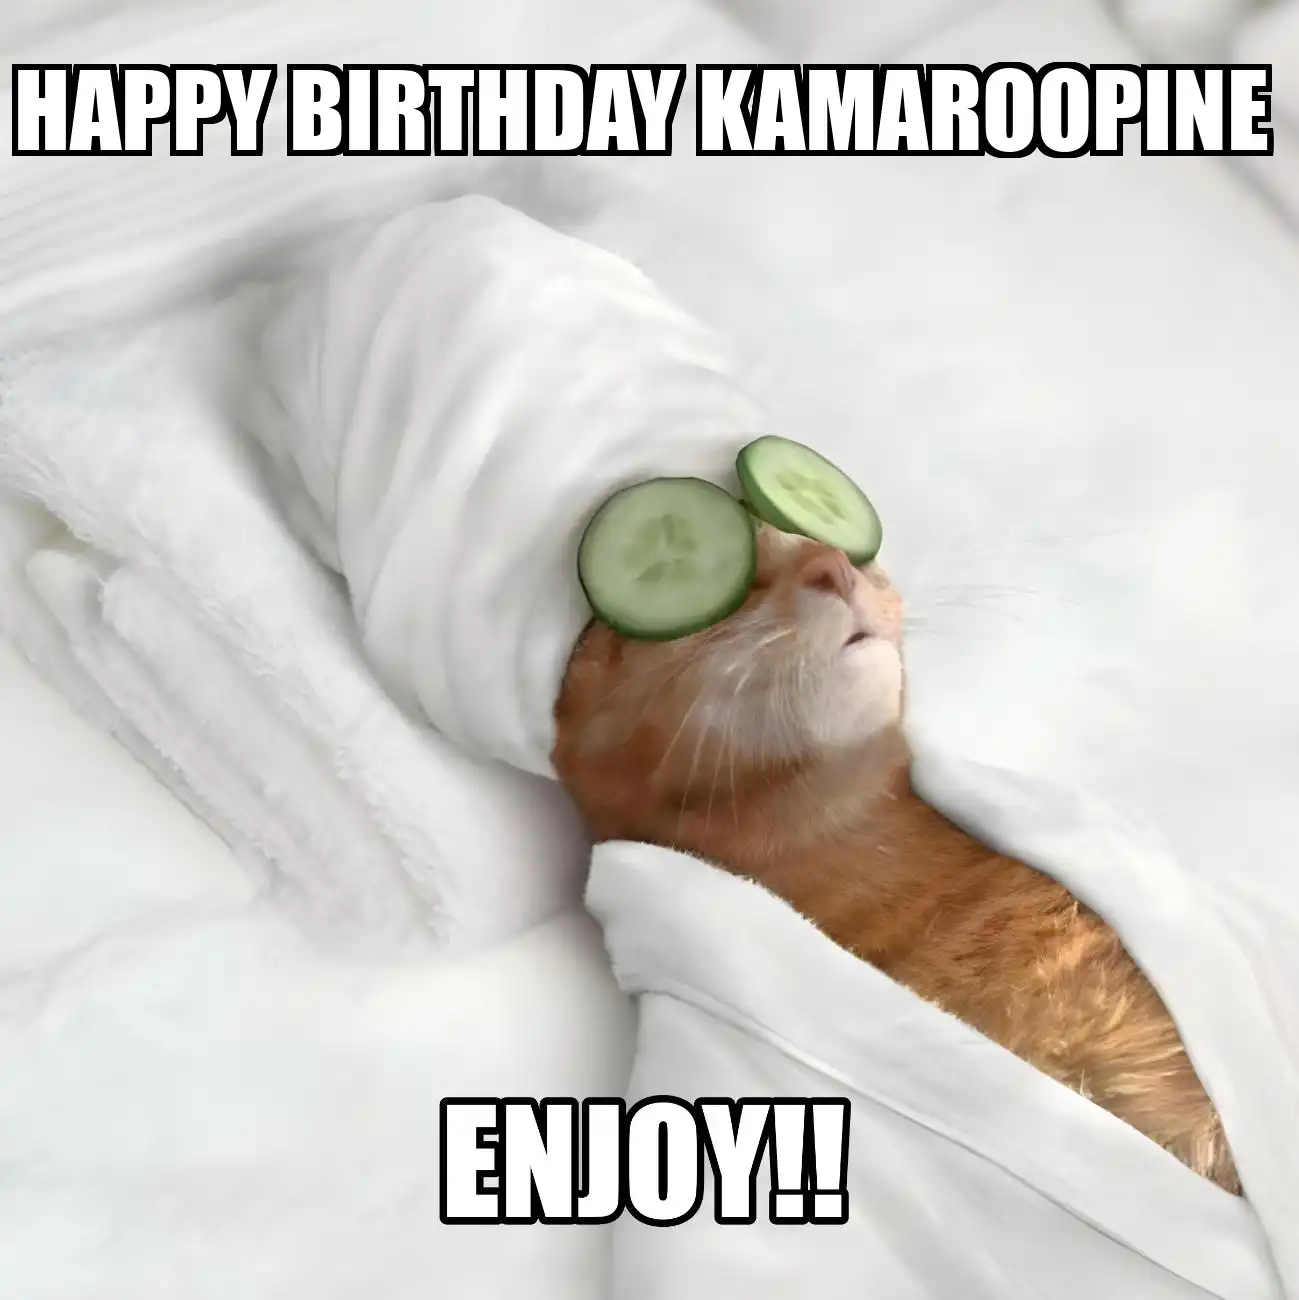 Happy Birthday Kamaroopine Enjoy Cat Meme